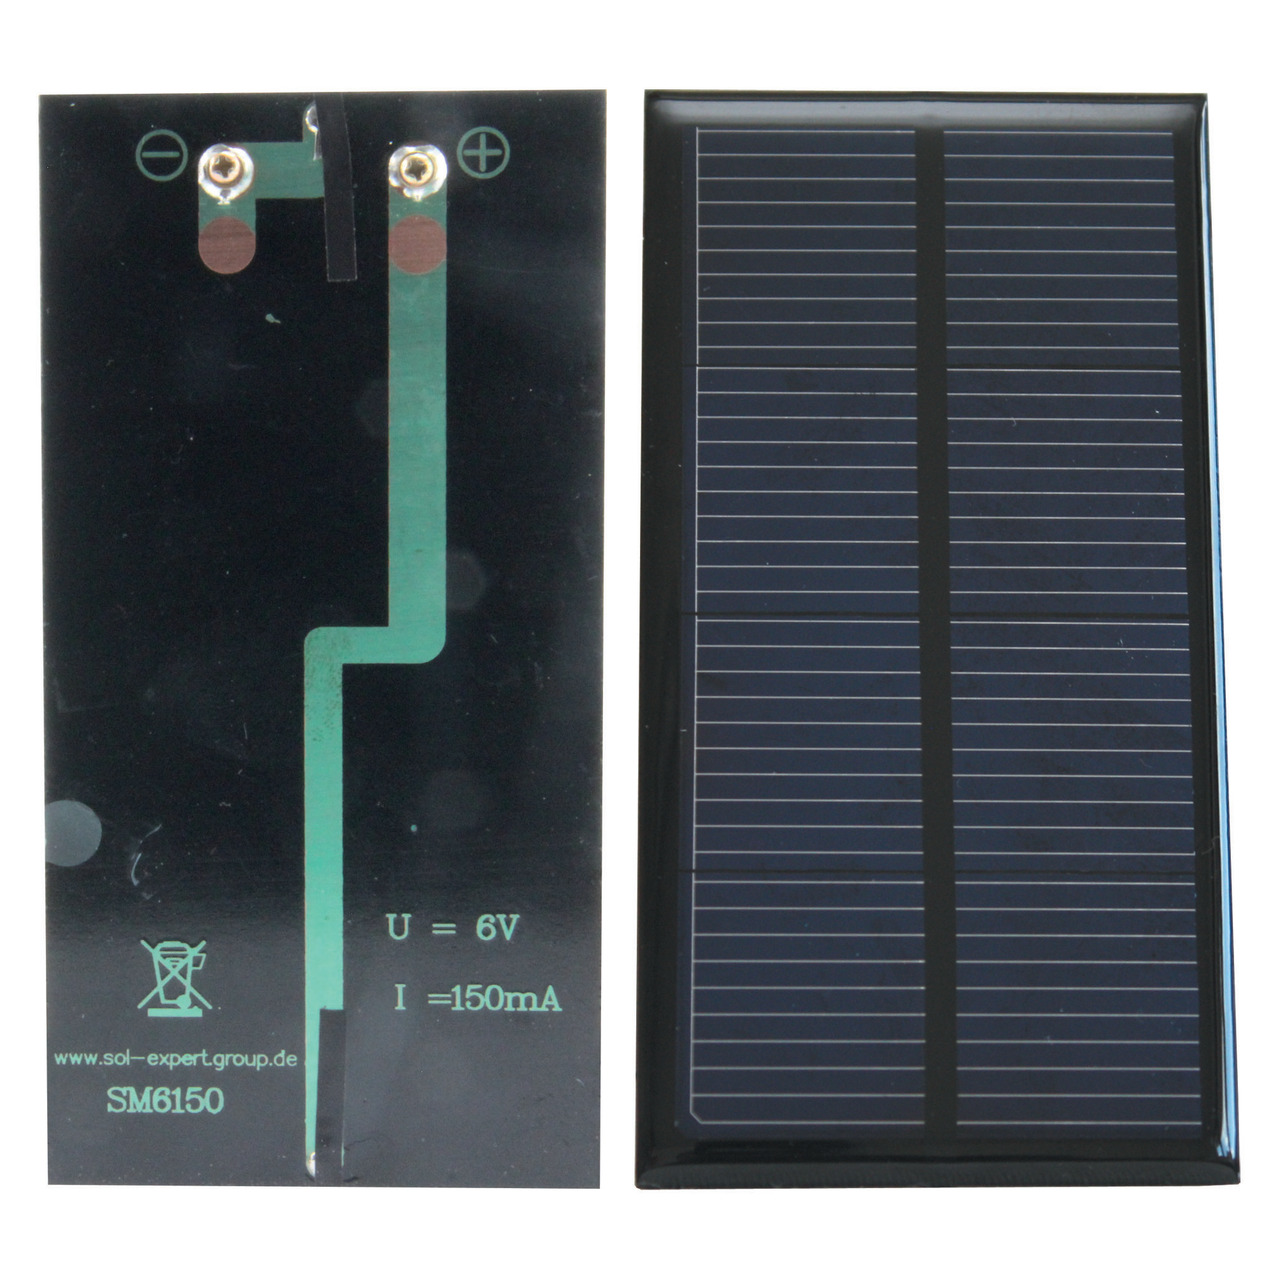 SOL-Expert Solarzelle SM6150- 6 V- 150 mA- vergossen unter Stromversorgung